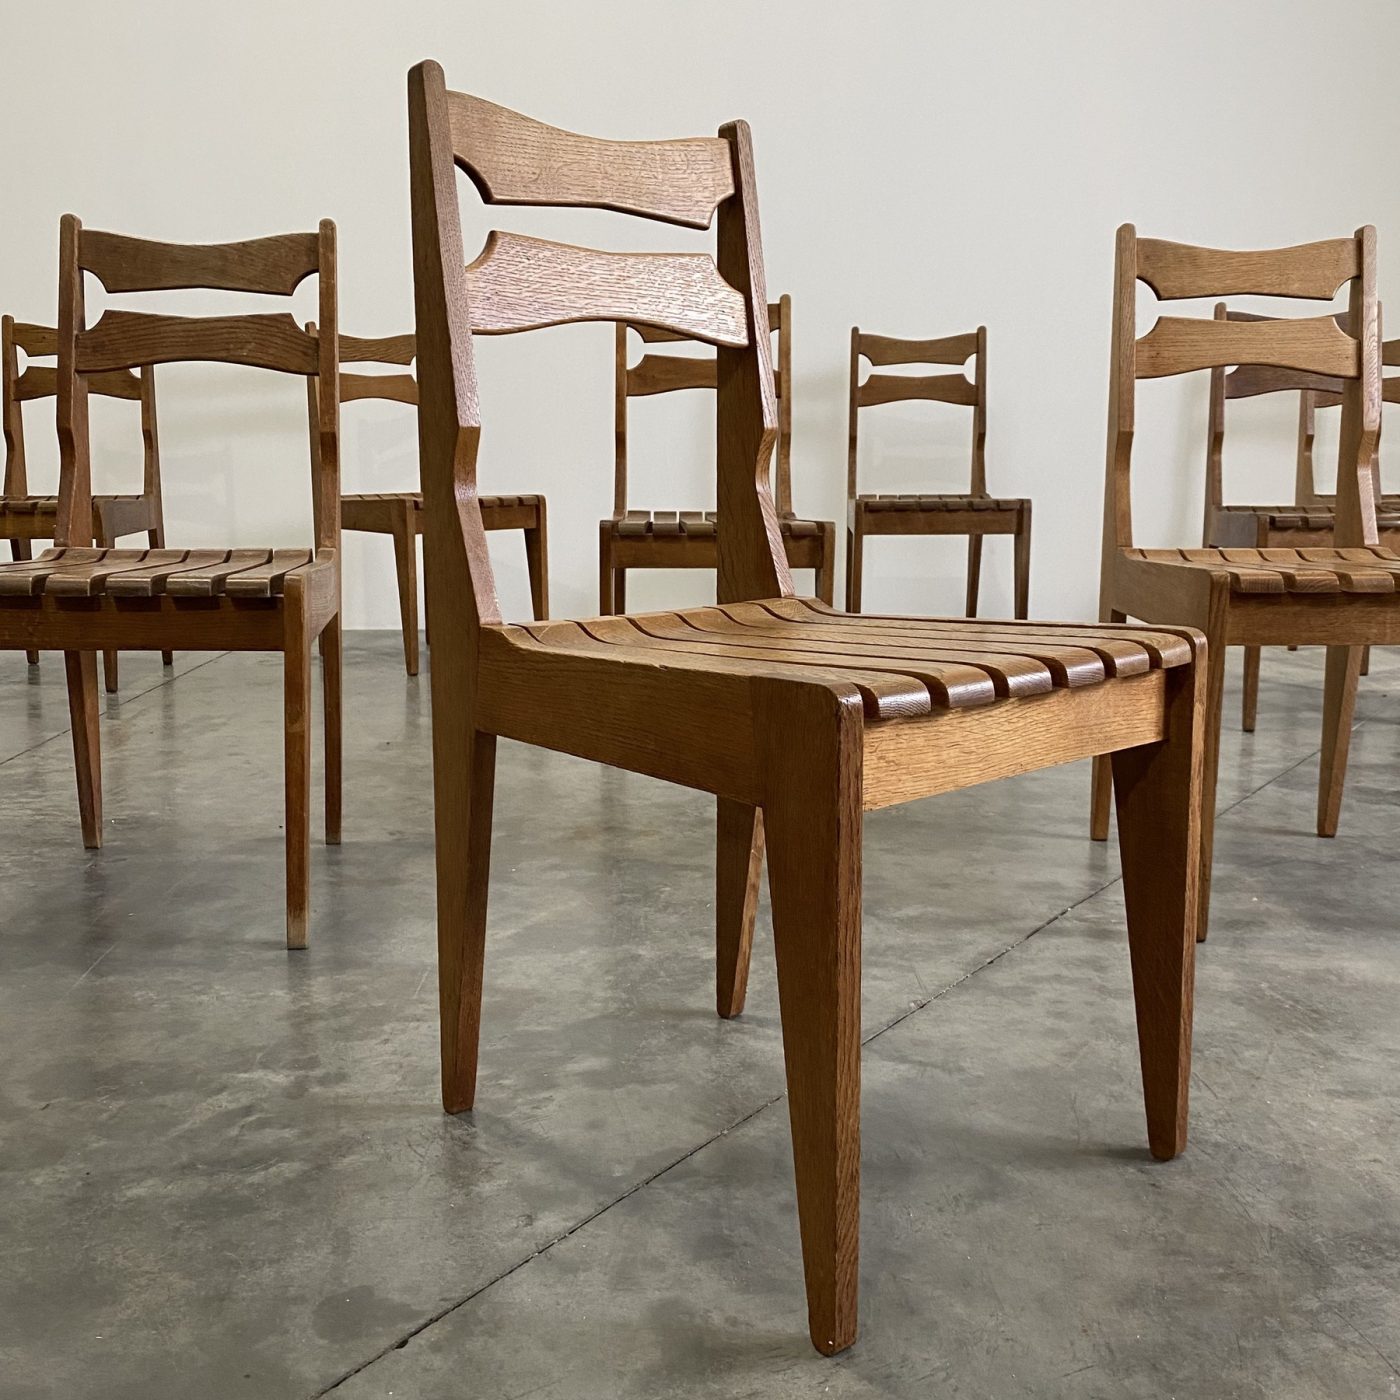 objet-vagabond-reconstruction-chairs0004